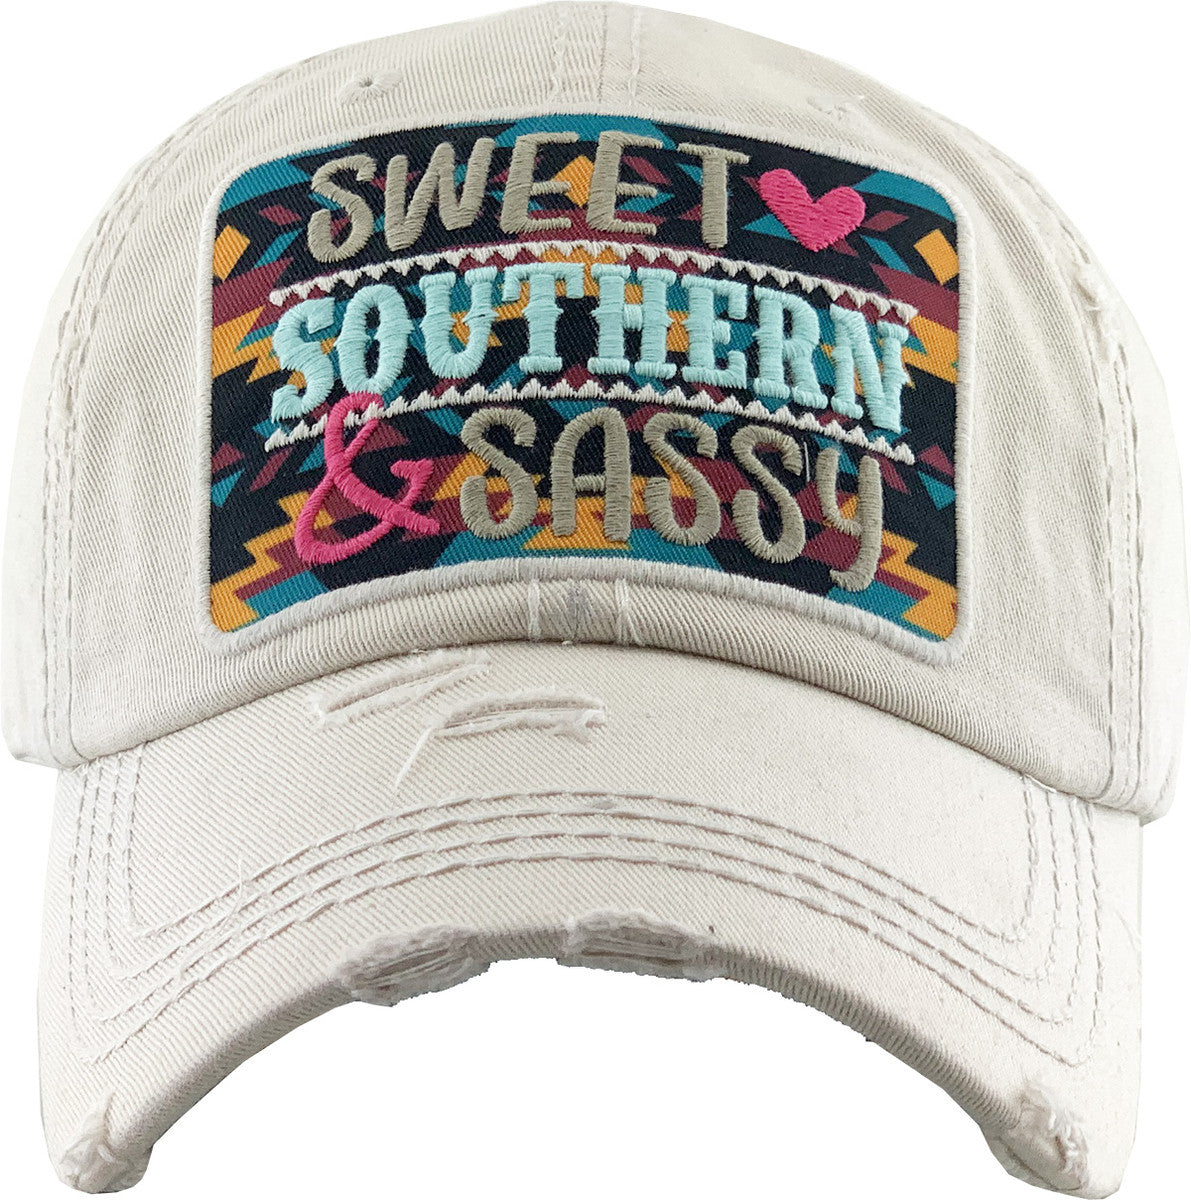 Stone Sweet Southern & Sassy Vintage Look Baseball Cap